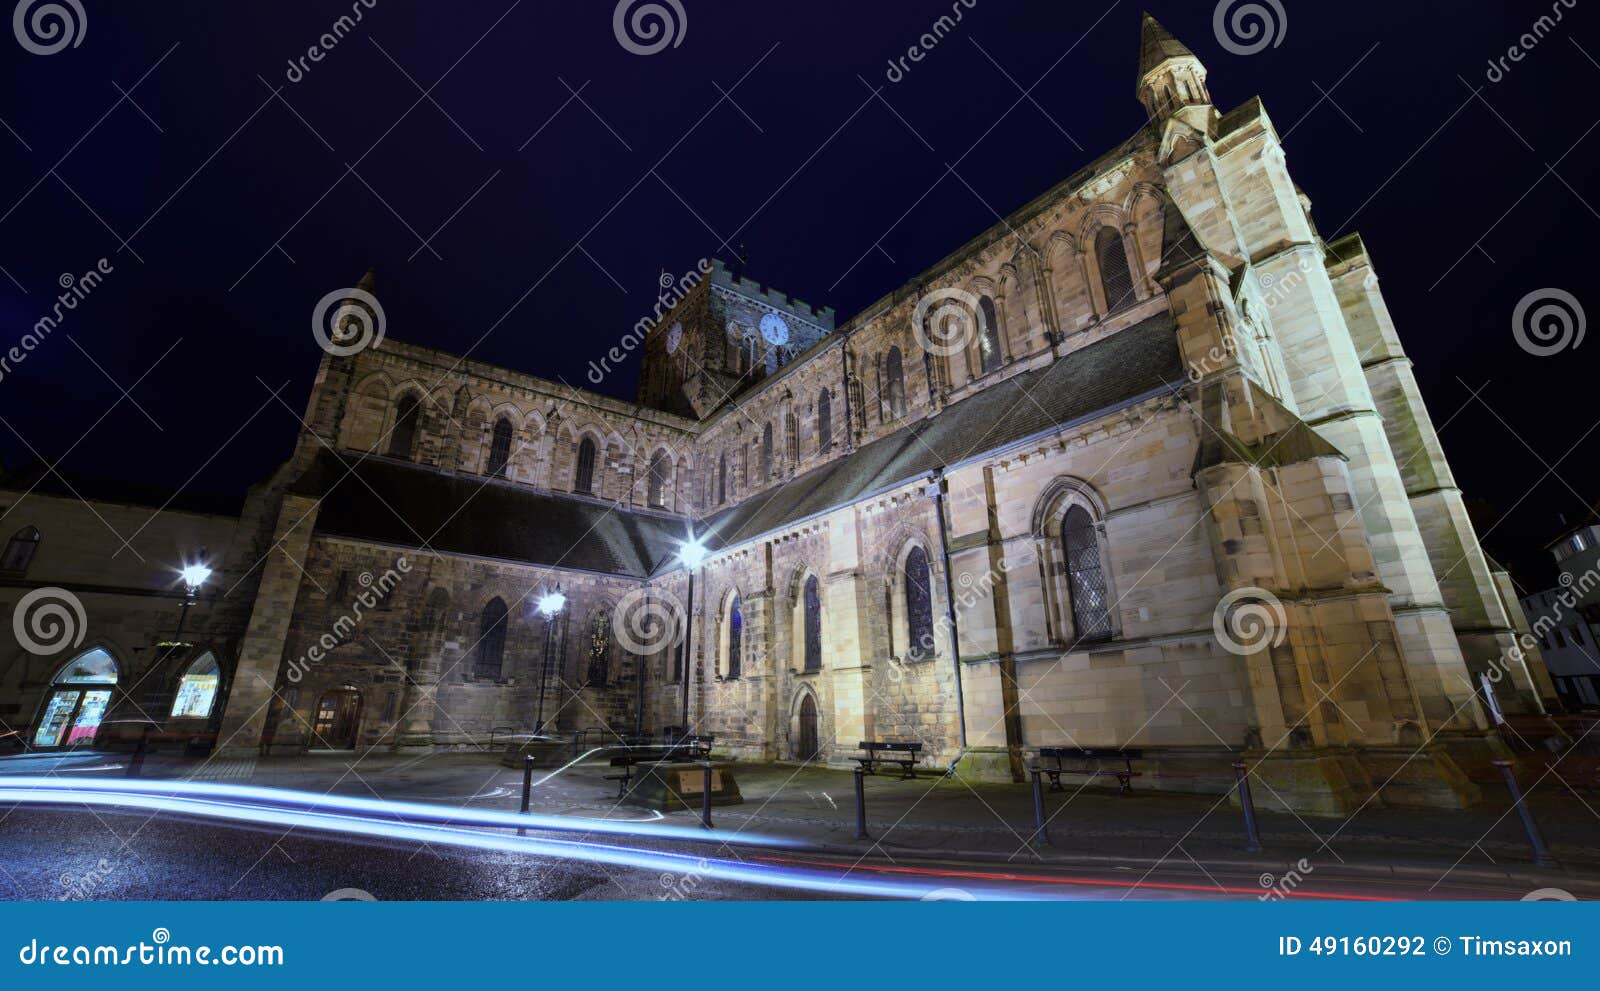 hexham abbey by night